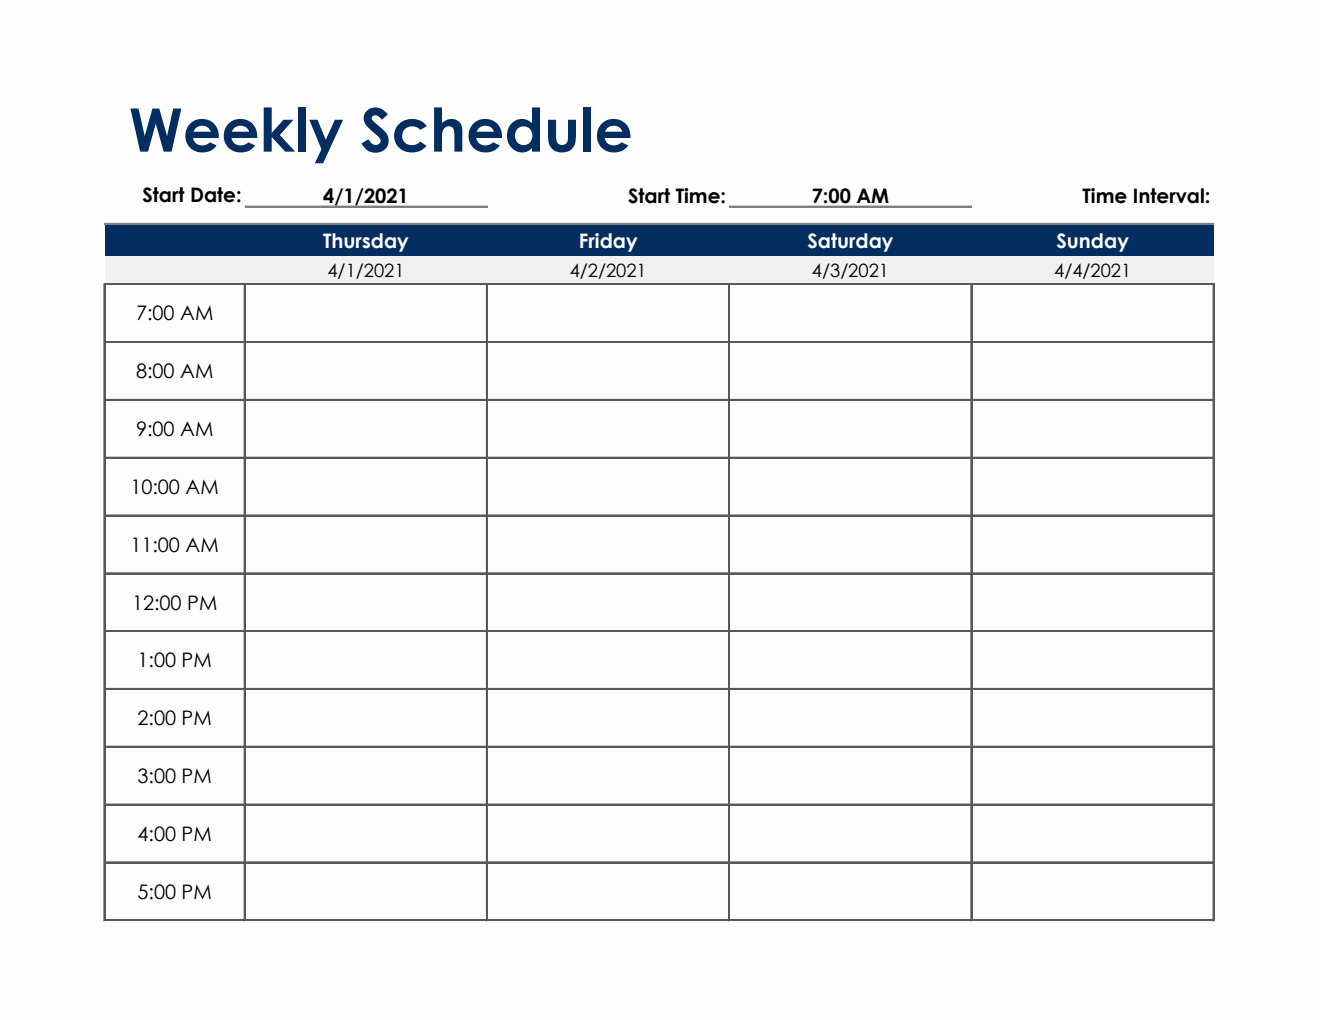 Weekly Schedule Template in Excel